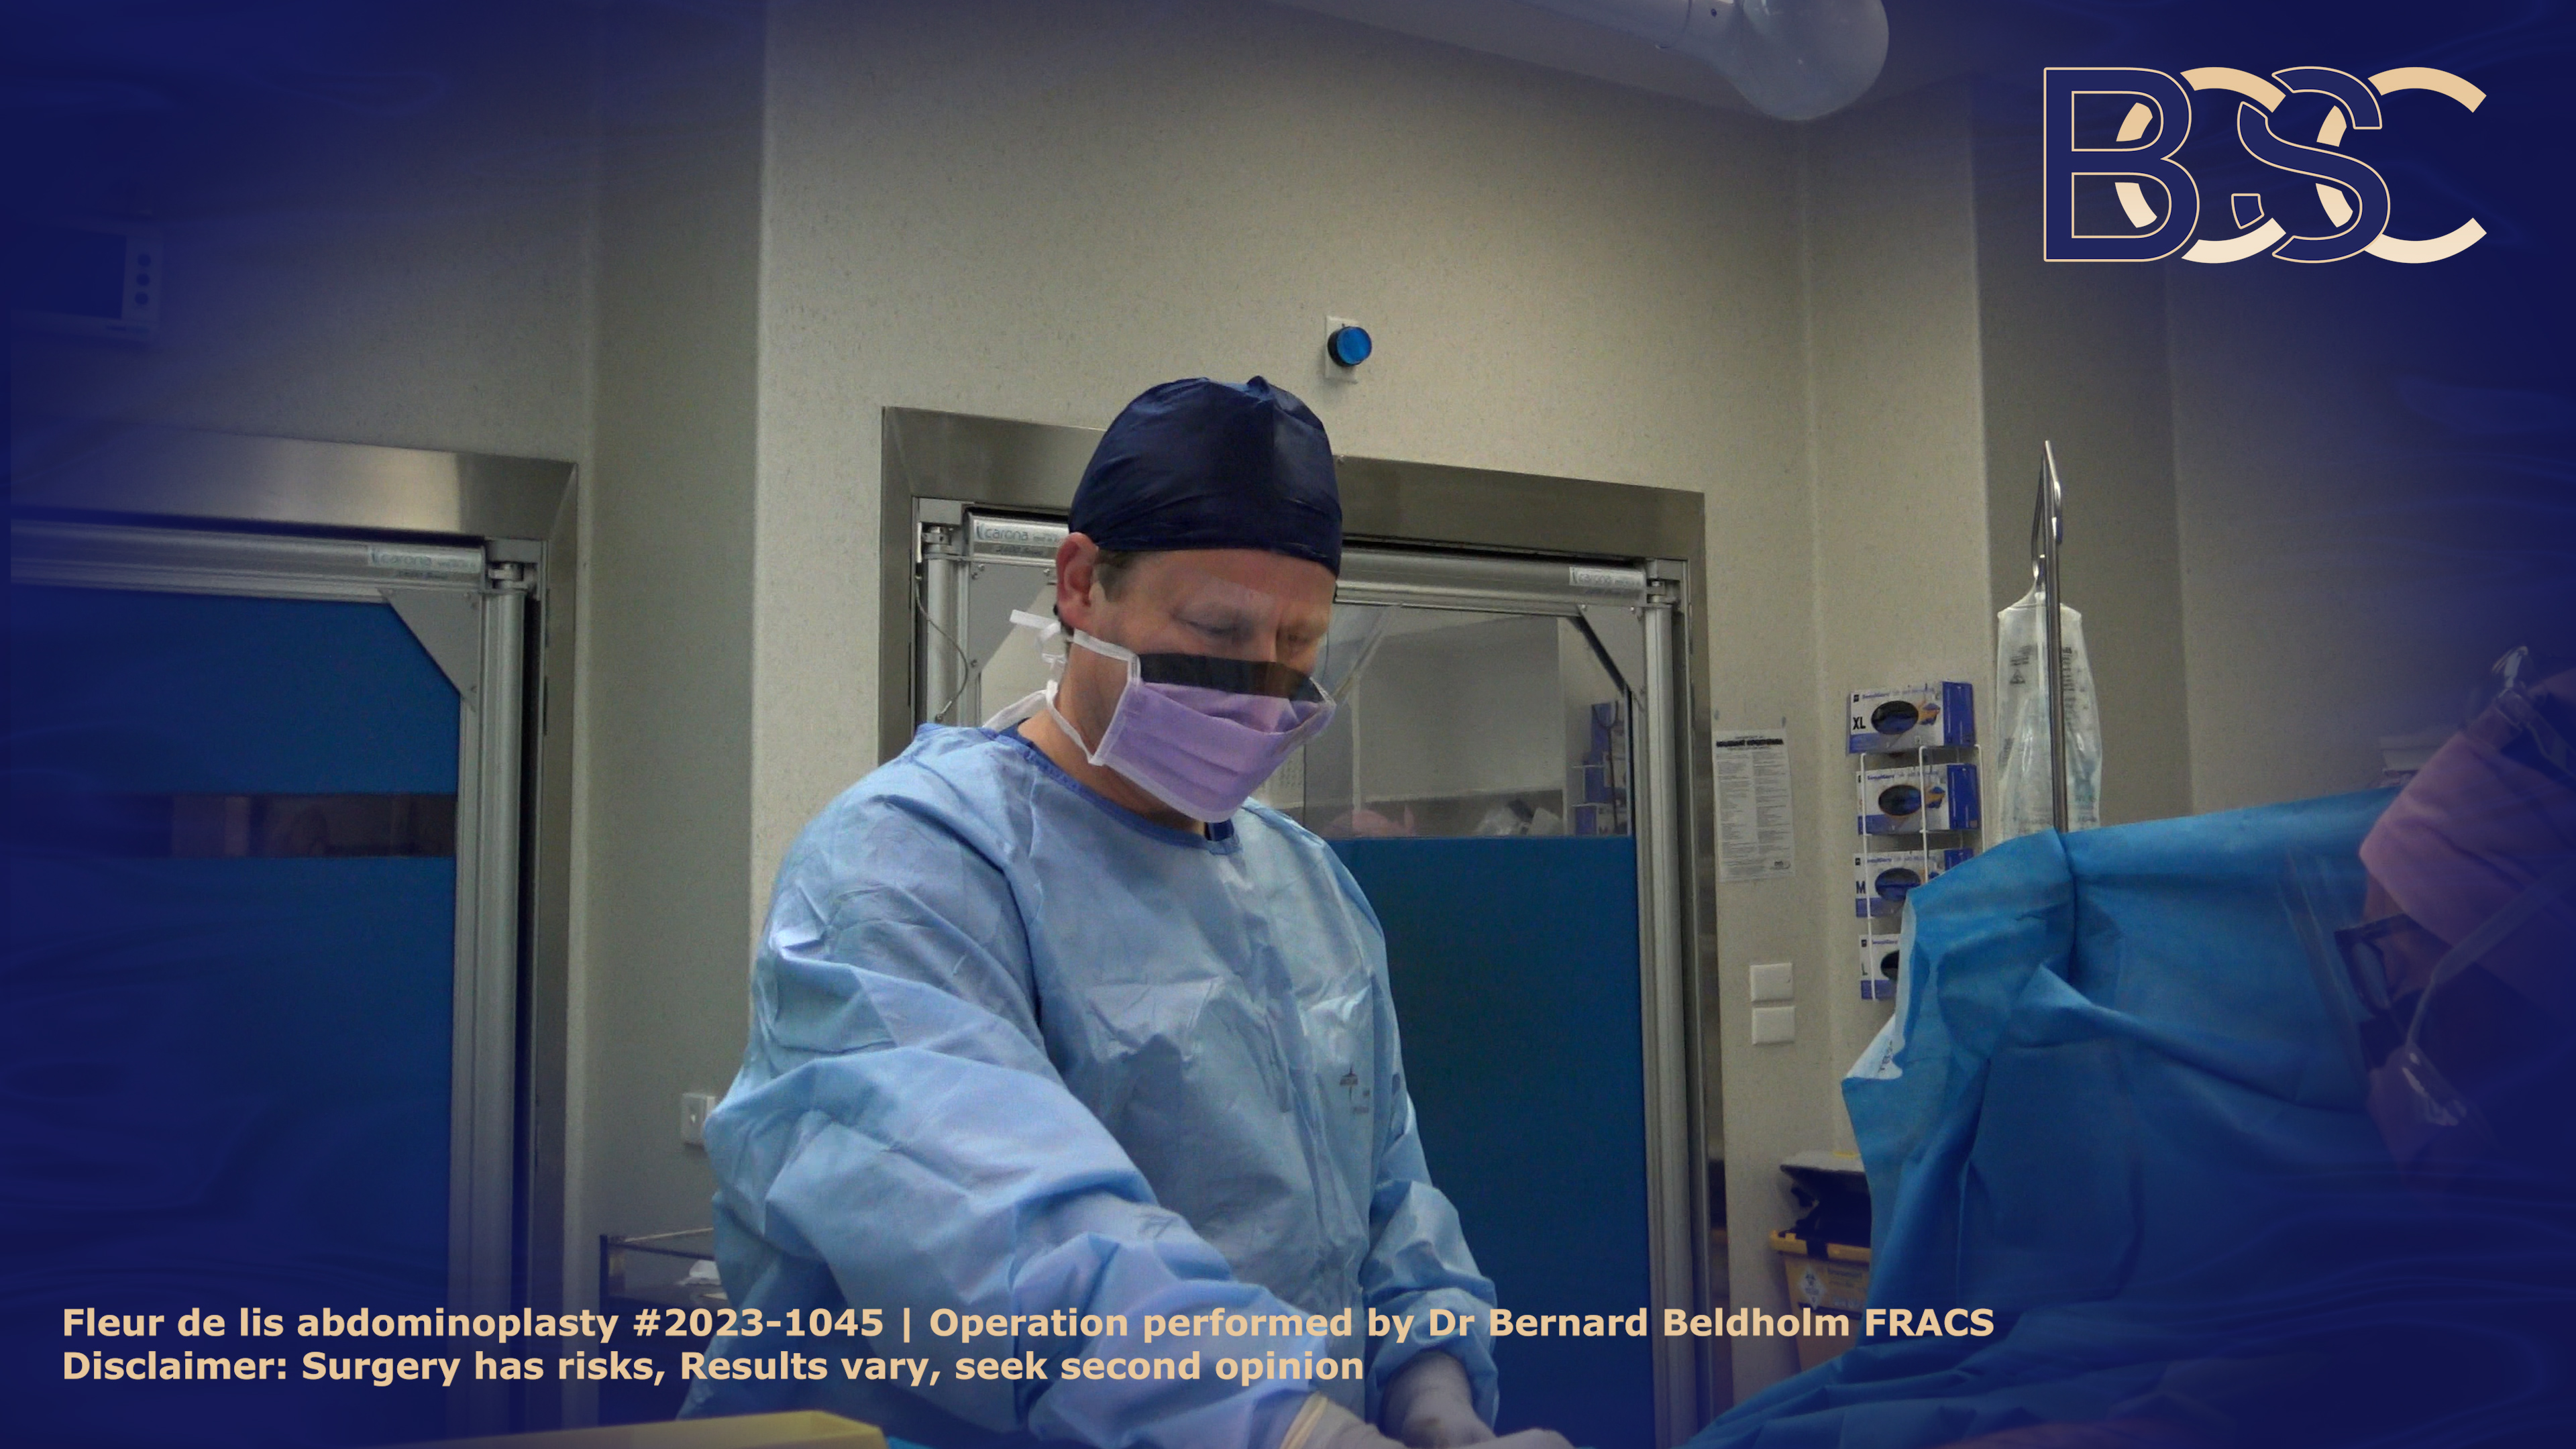 Dr Beldholm In operating theatre performing a Fleur de lis abdominoplasty | BB